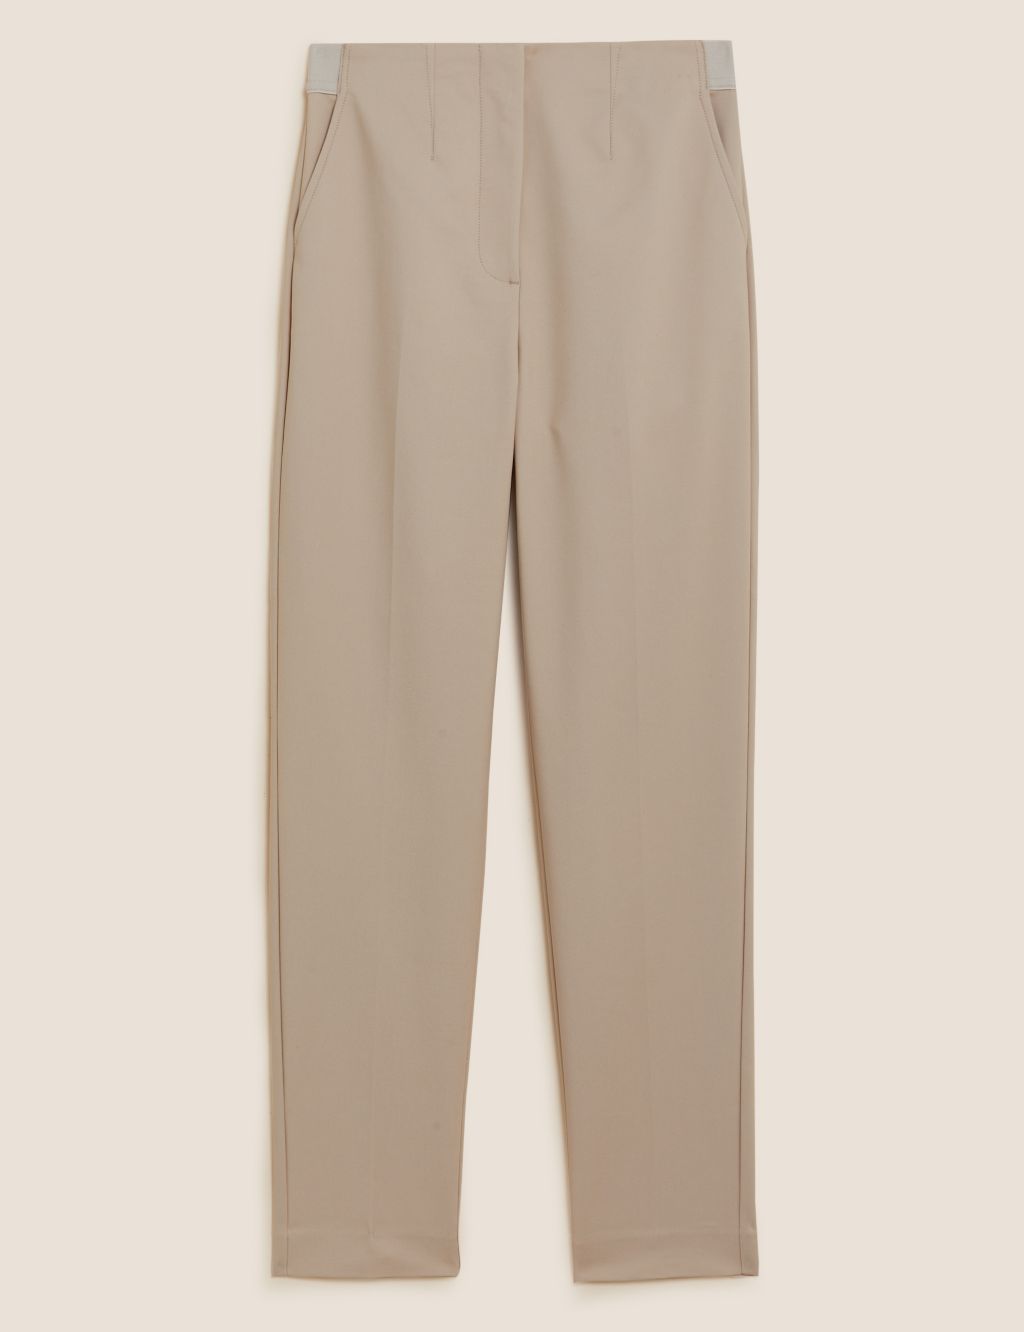 Cotton Blend Slim Fit Ankle Grazer Trousers image 1